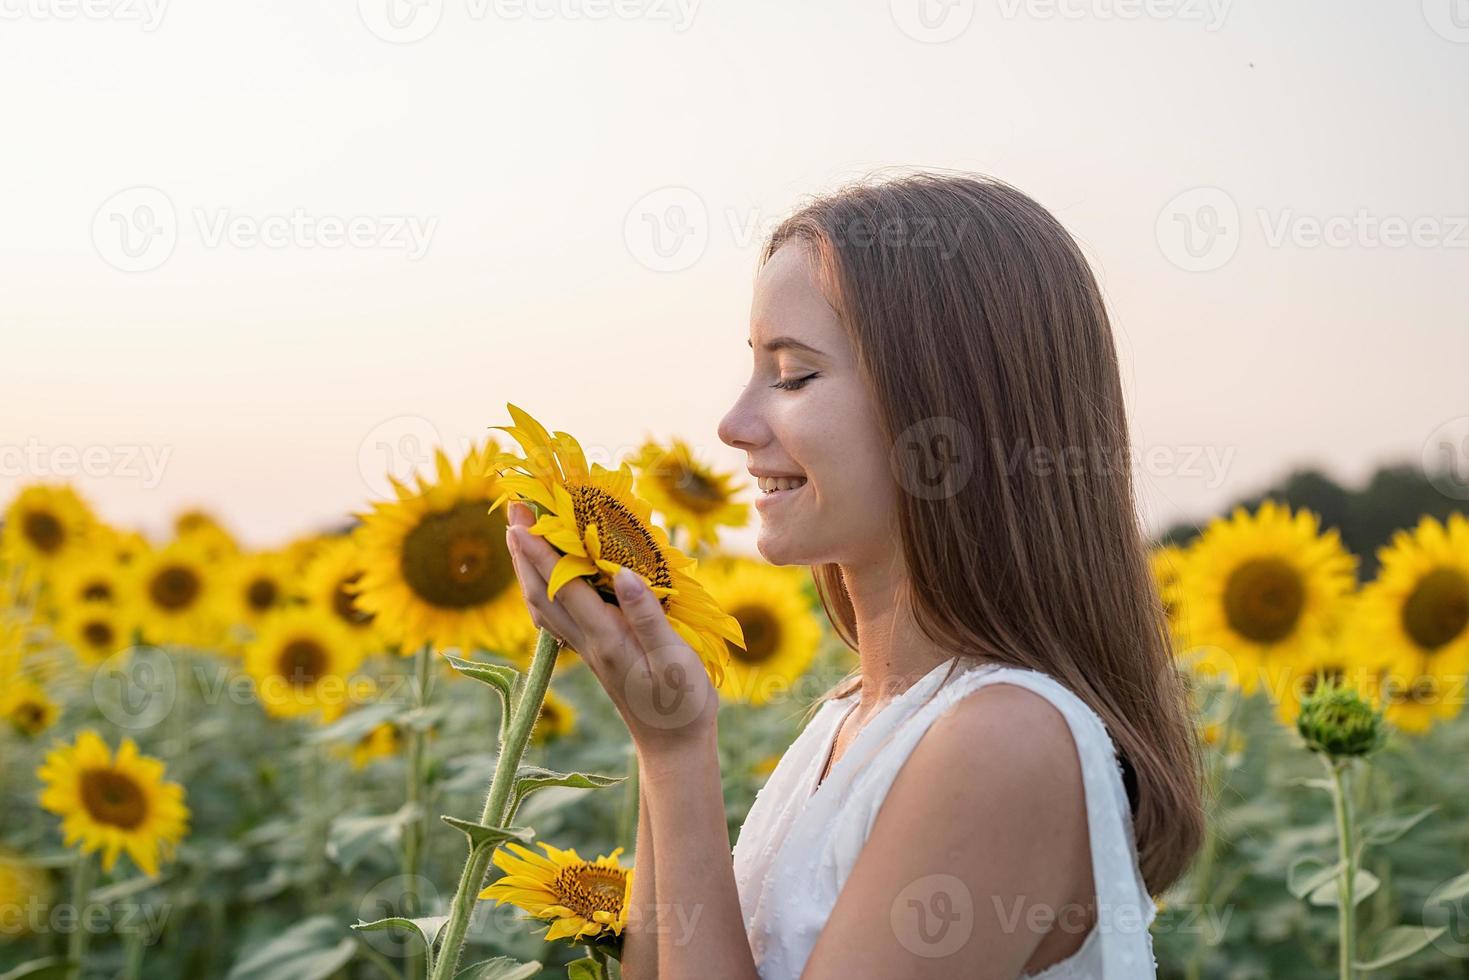 garota de vestido branco cheirando a flor de girassol. foto